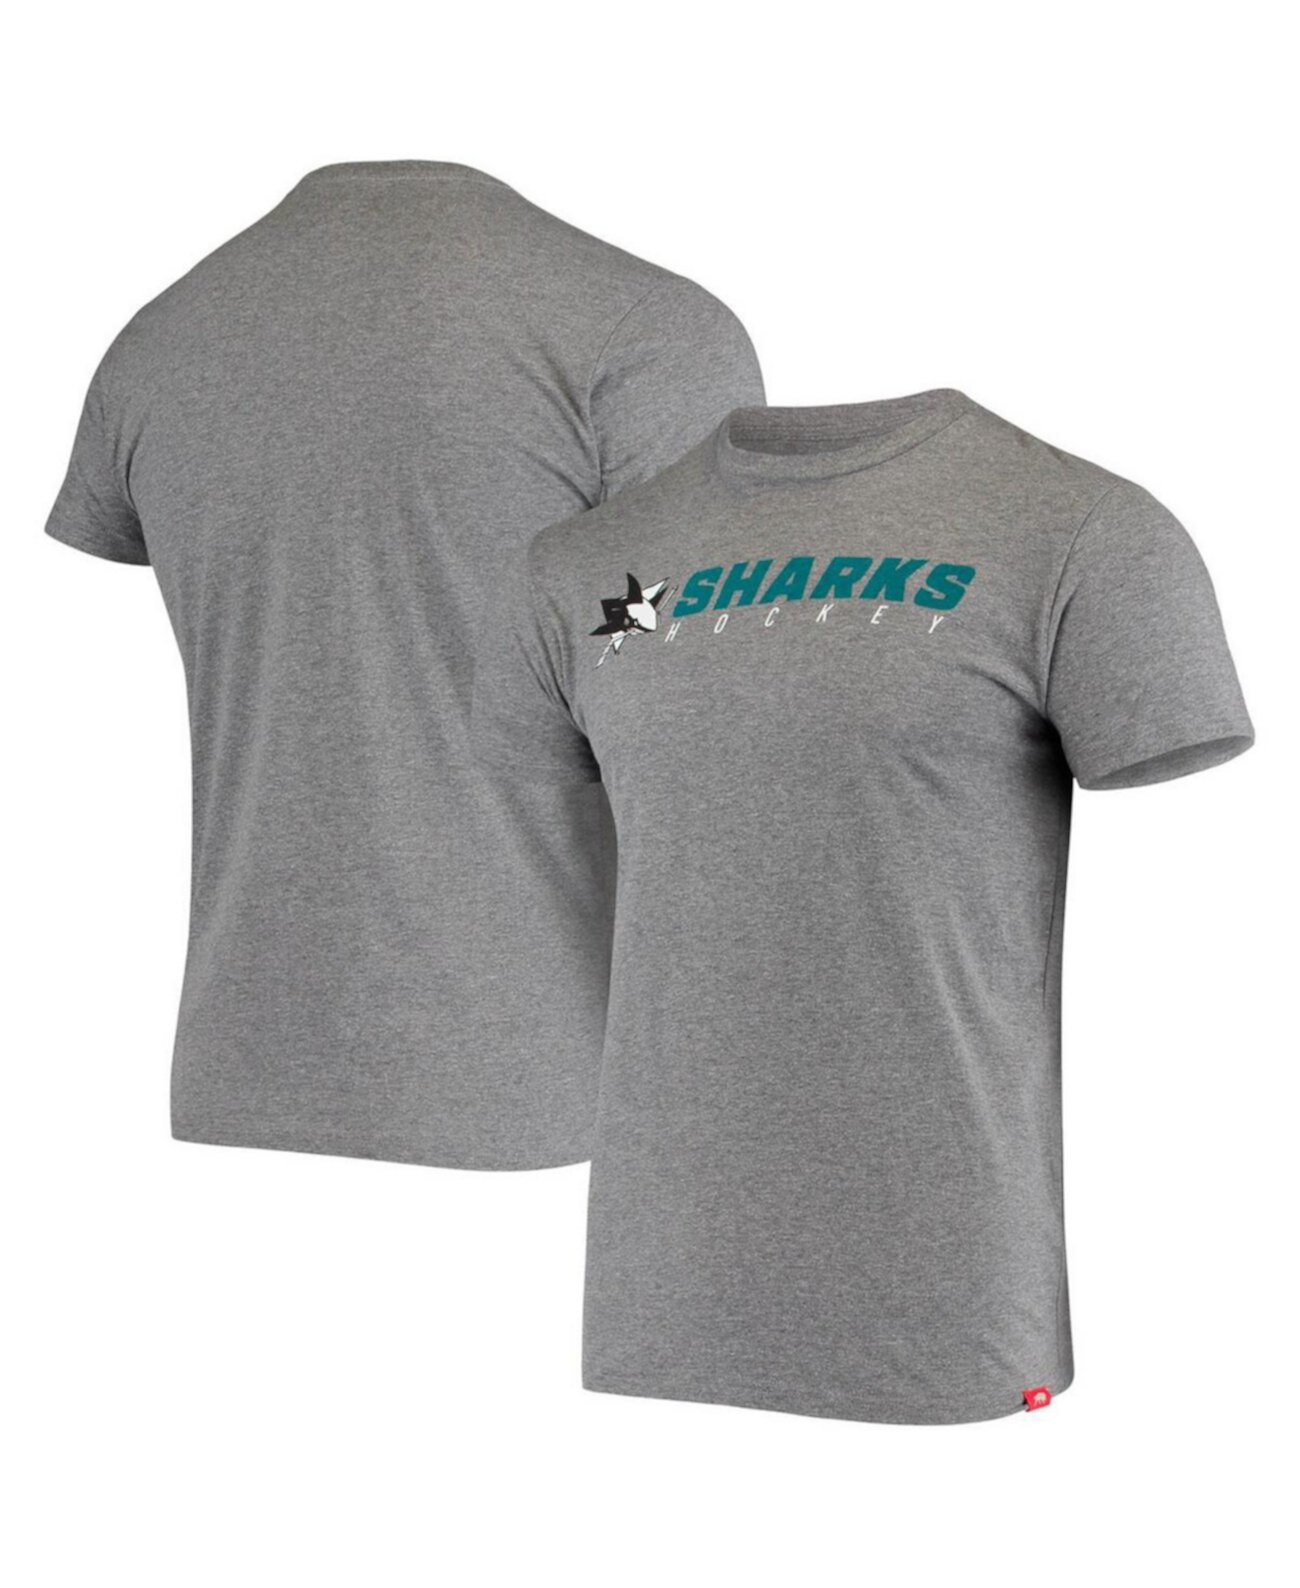 Мужская футболка San Jose Sharks Hockey Comfy Tri-Blend с меланжевым покрытием серого цвета Le Coq Sportif